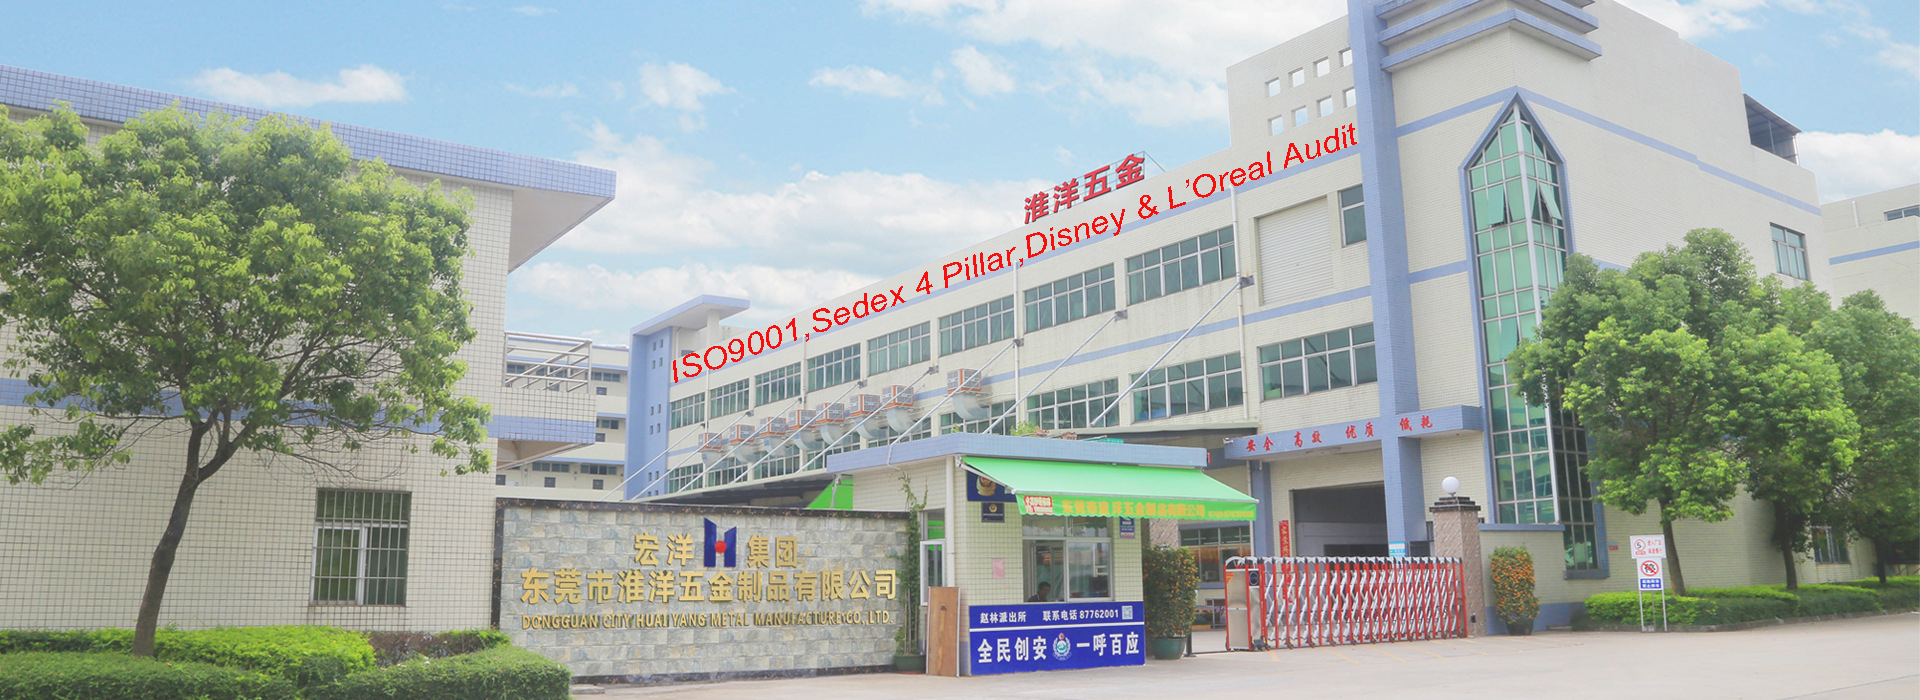 China tin box factory Sedex 4 Pillar Disney L'Oreal audit